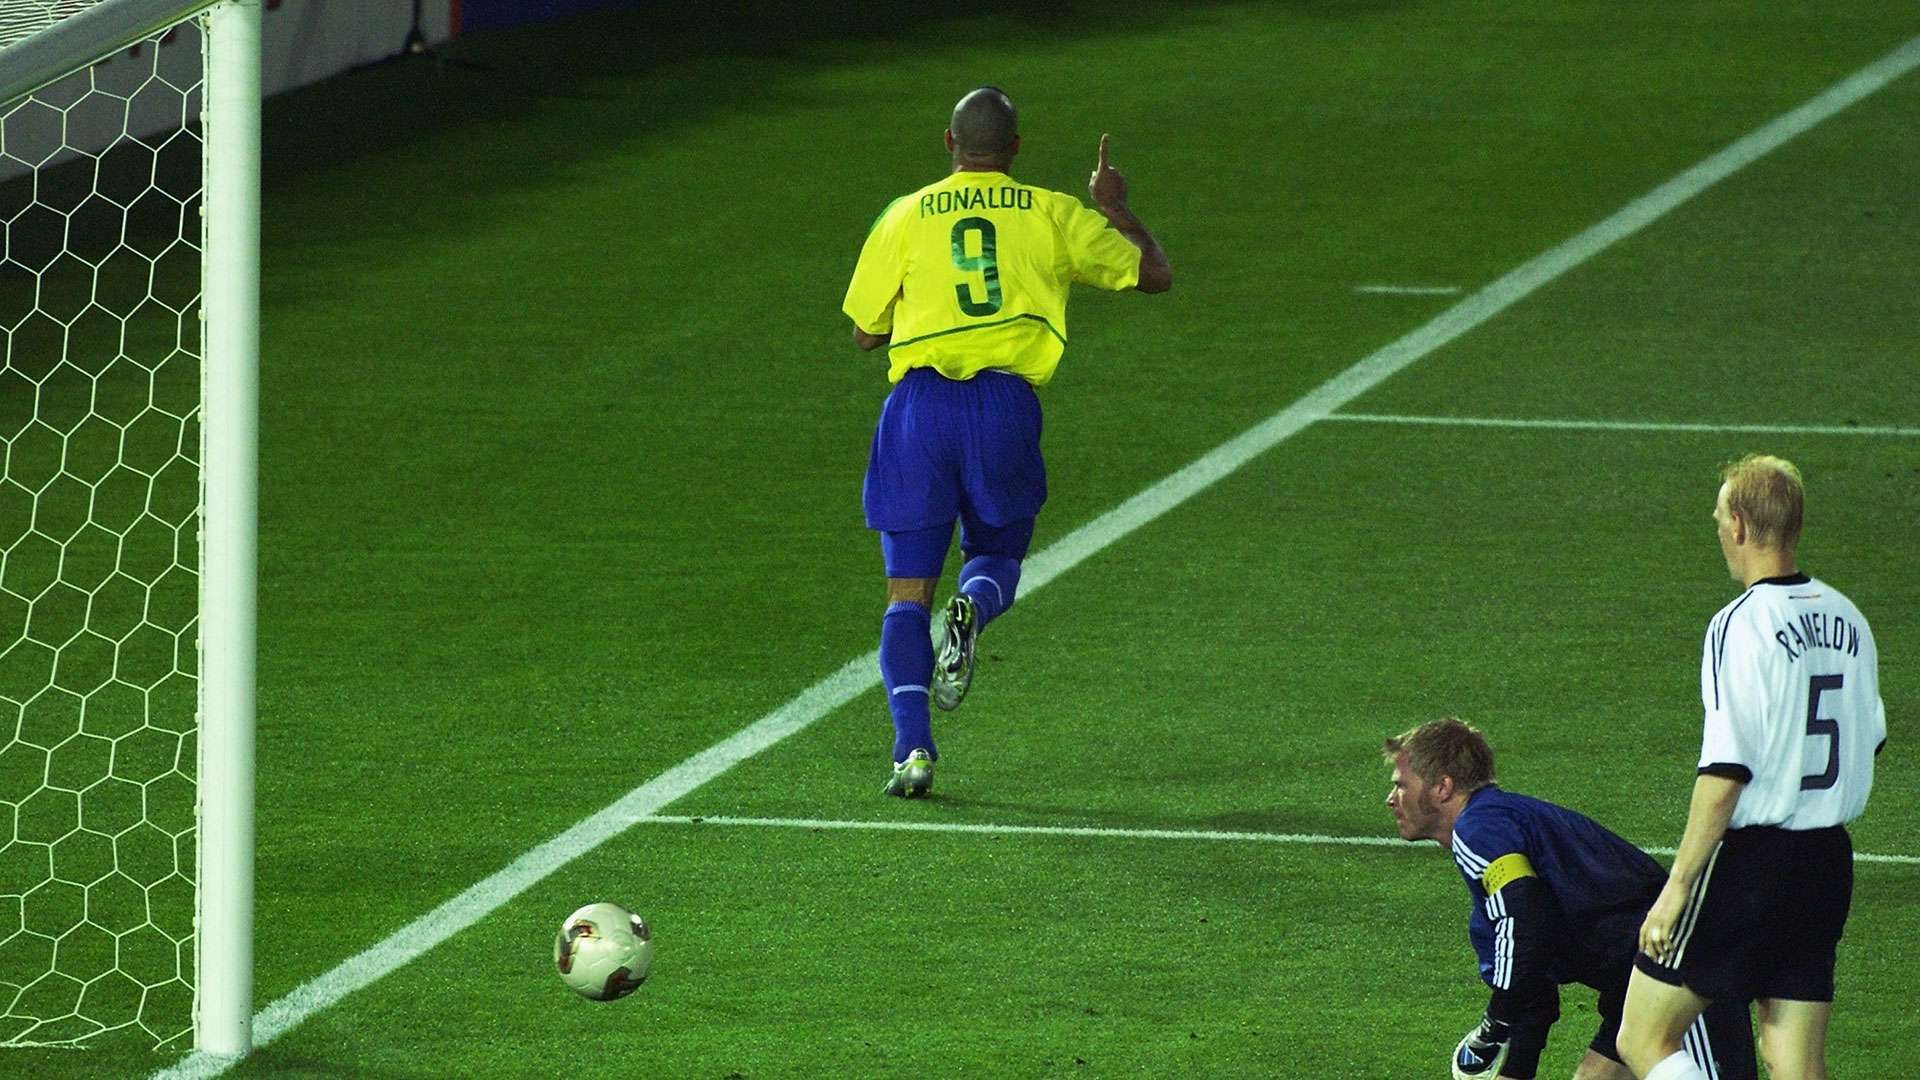 Ronaldo Brazil Germany World Cup 2002